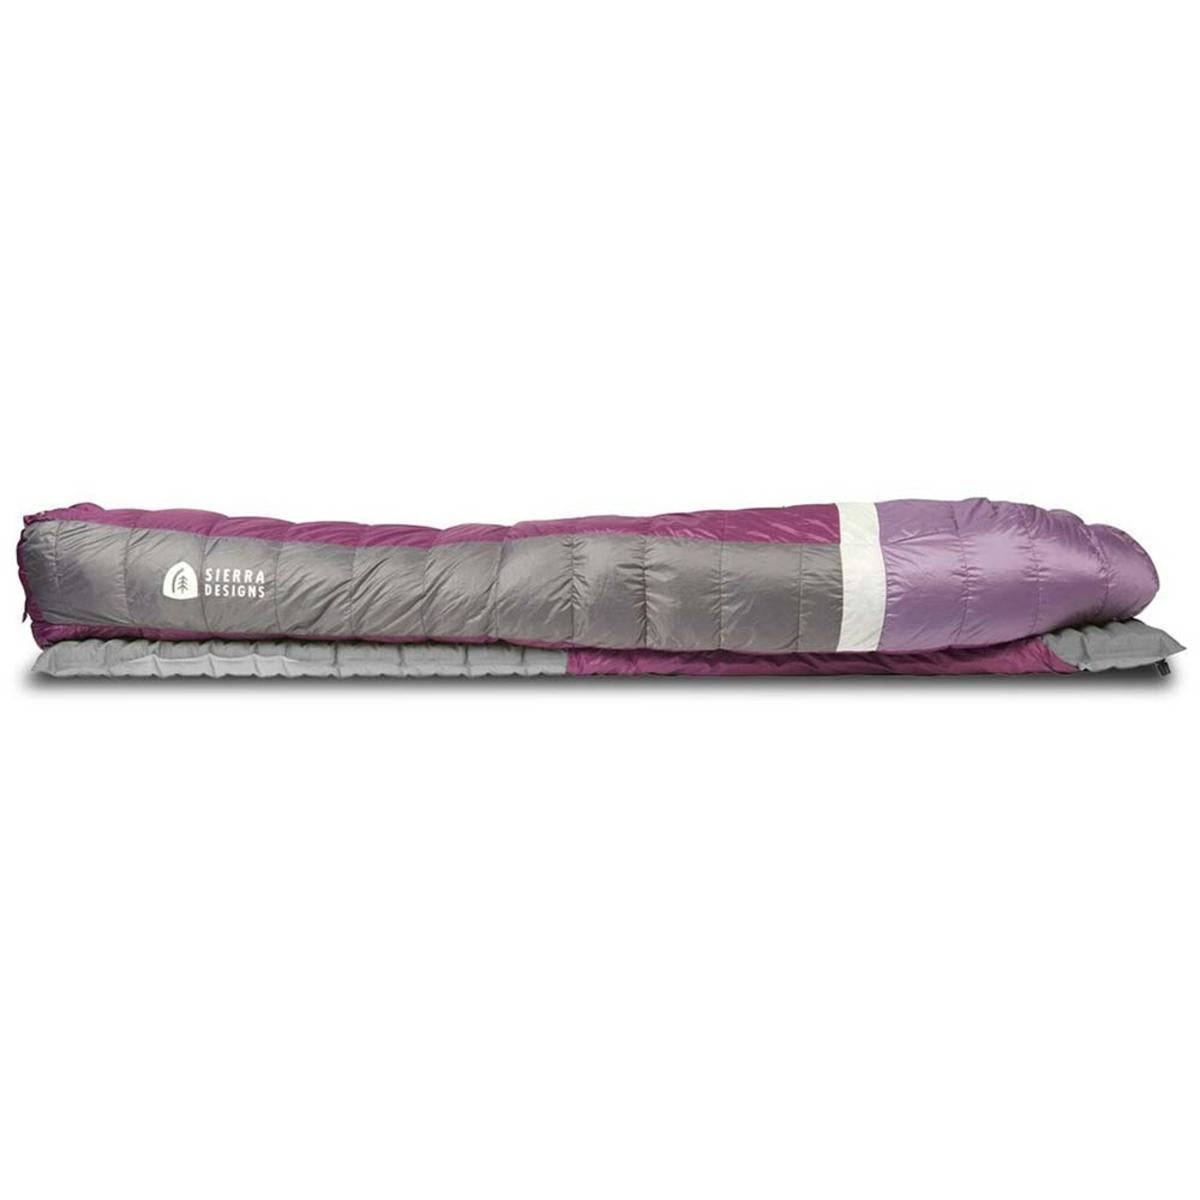 Sierra Designs Women's Backcountry Bed 650F 20 Degree Sleeping Bag - Regular